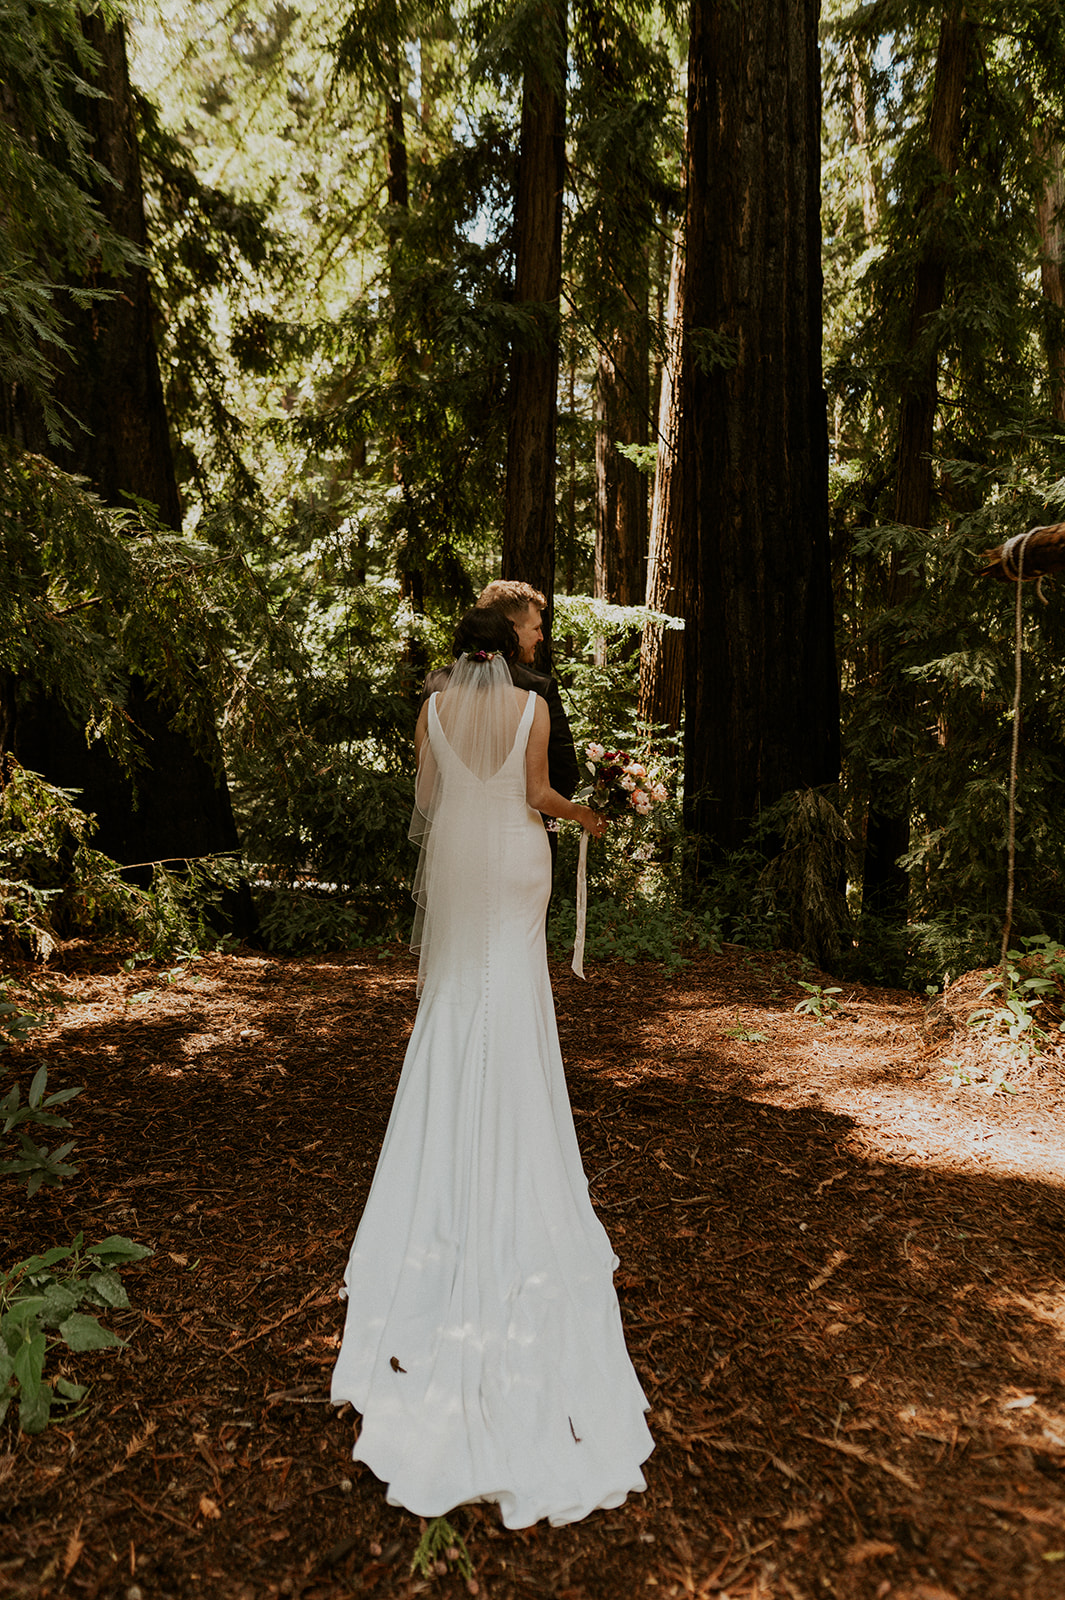 First look between bride and groom in the Redwoods of California in Big Sur